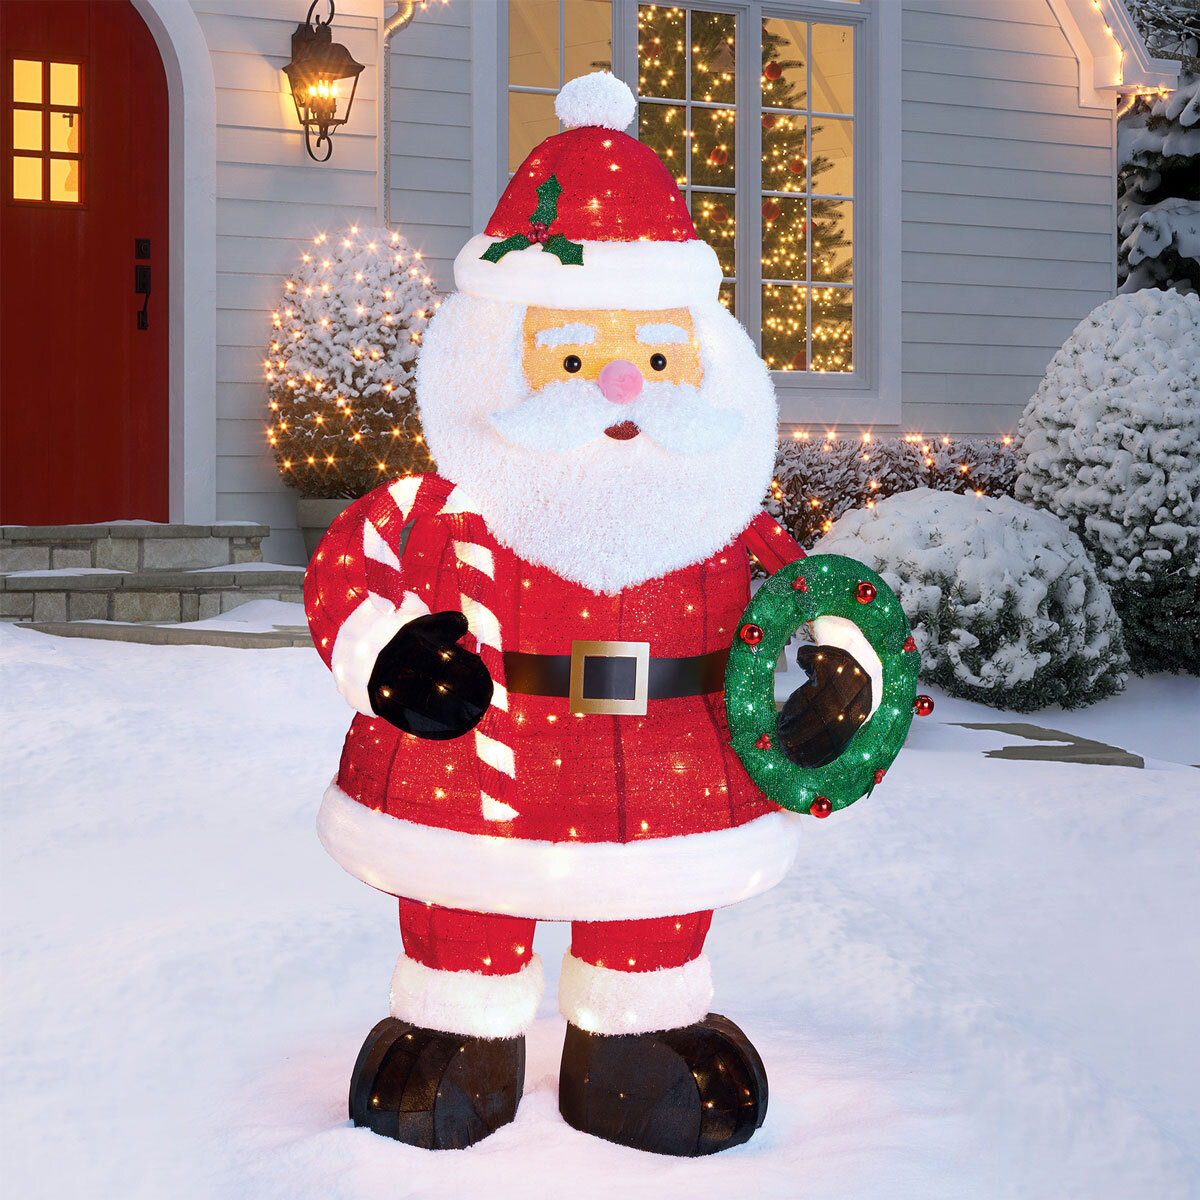 Buy 72" Pop-Up Santa with LED Lifestyle Image at Costco.co.uk